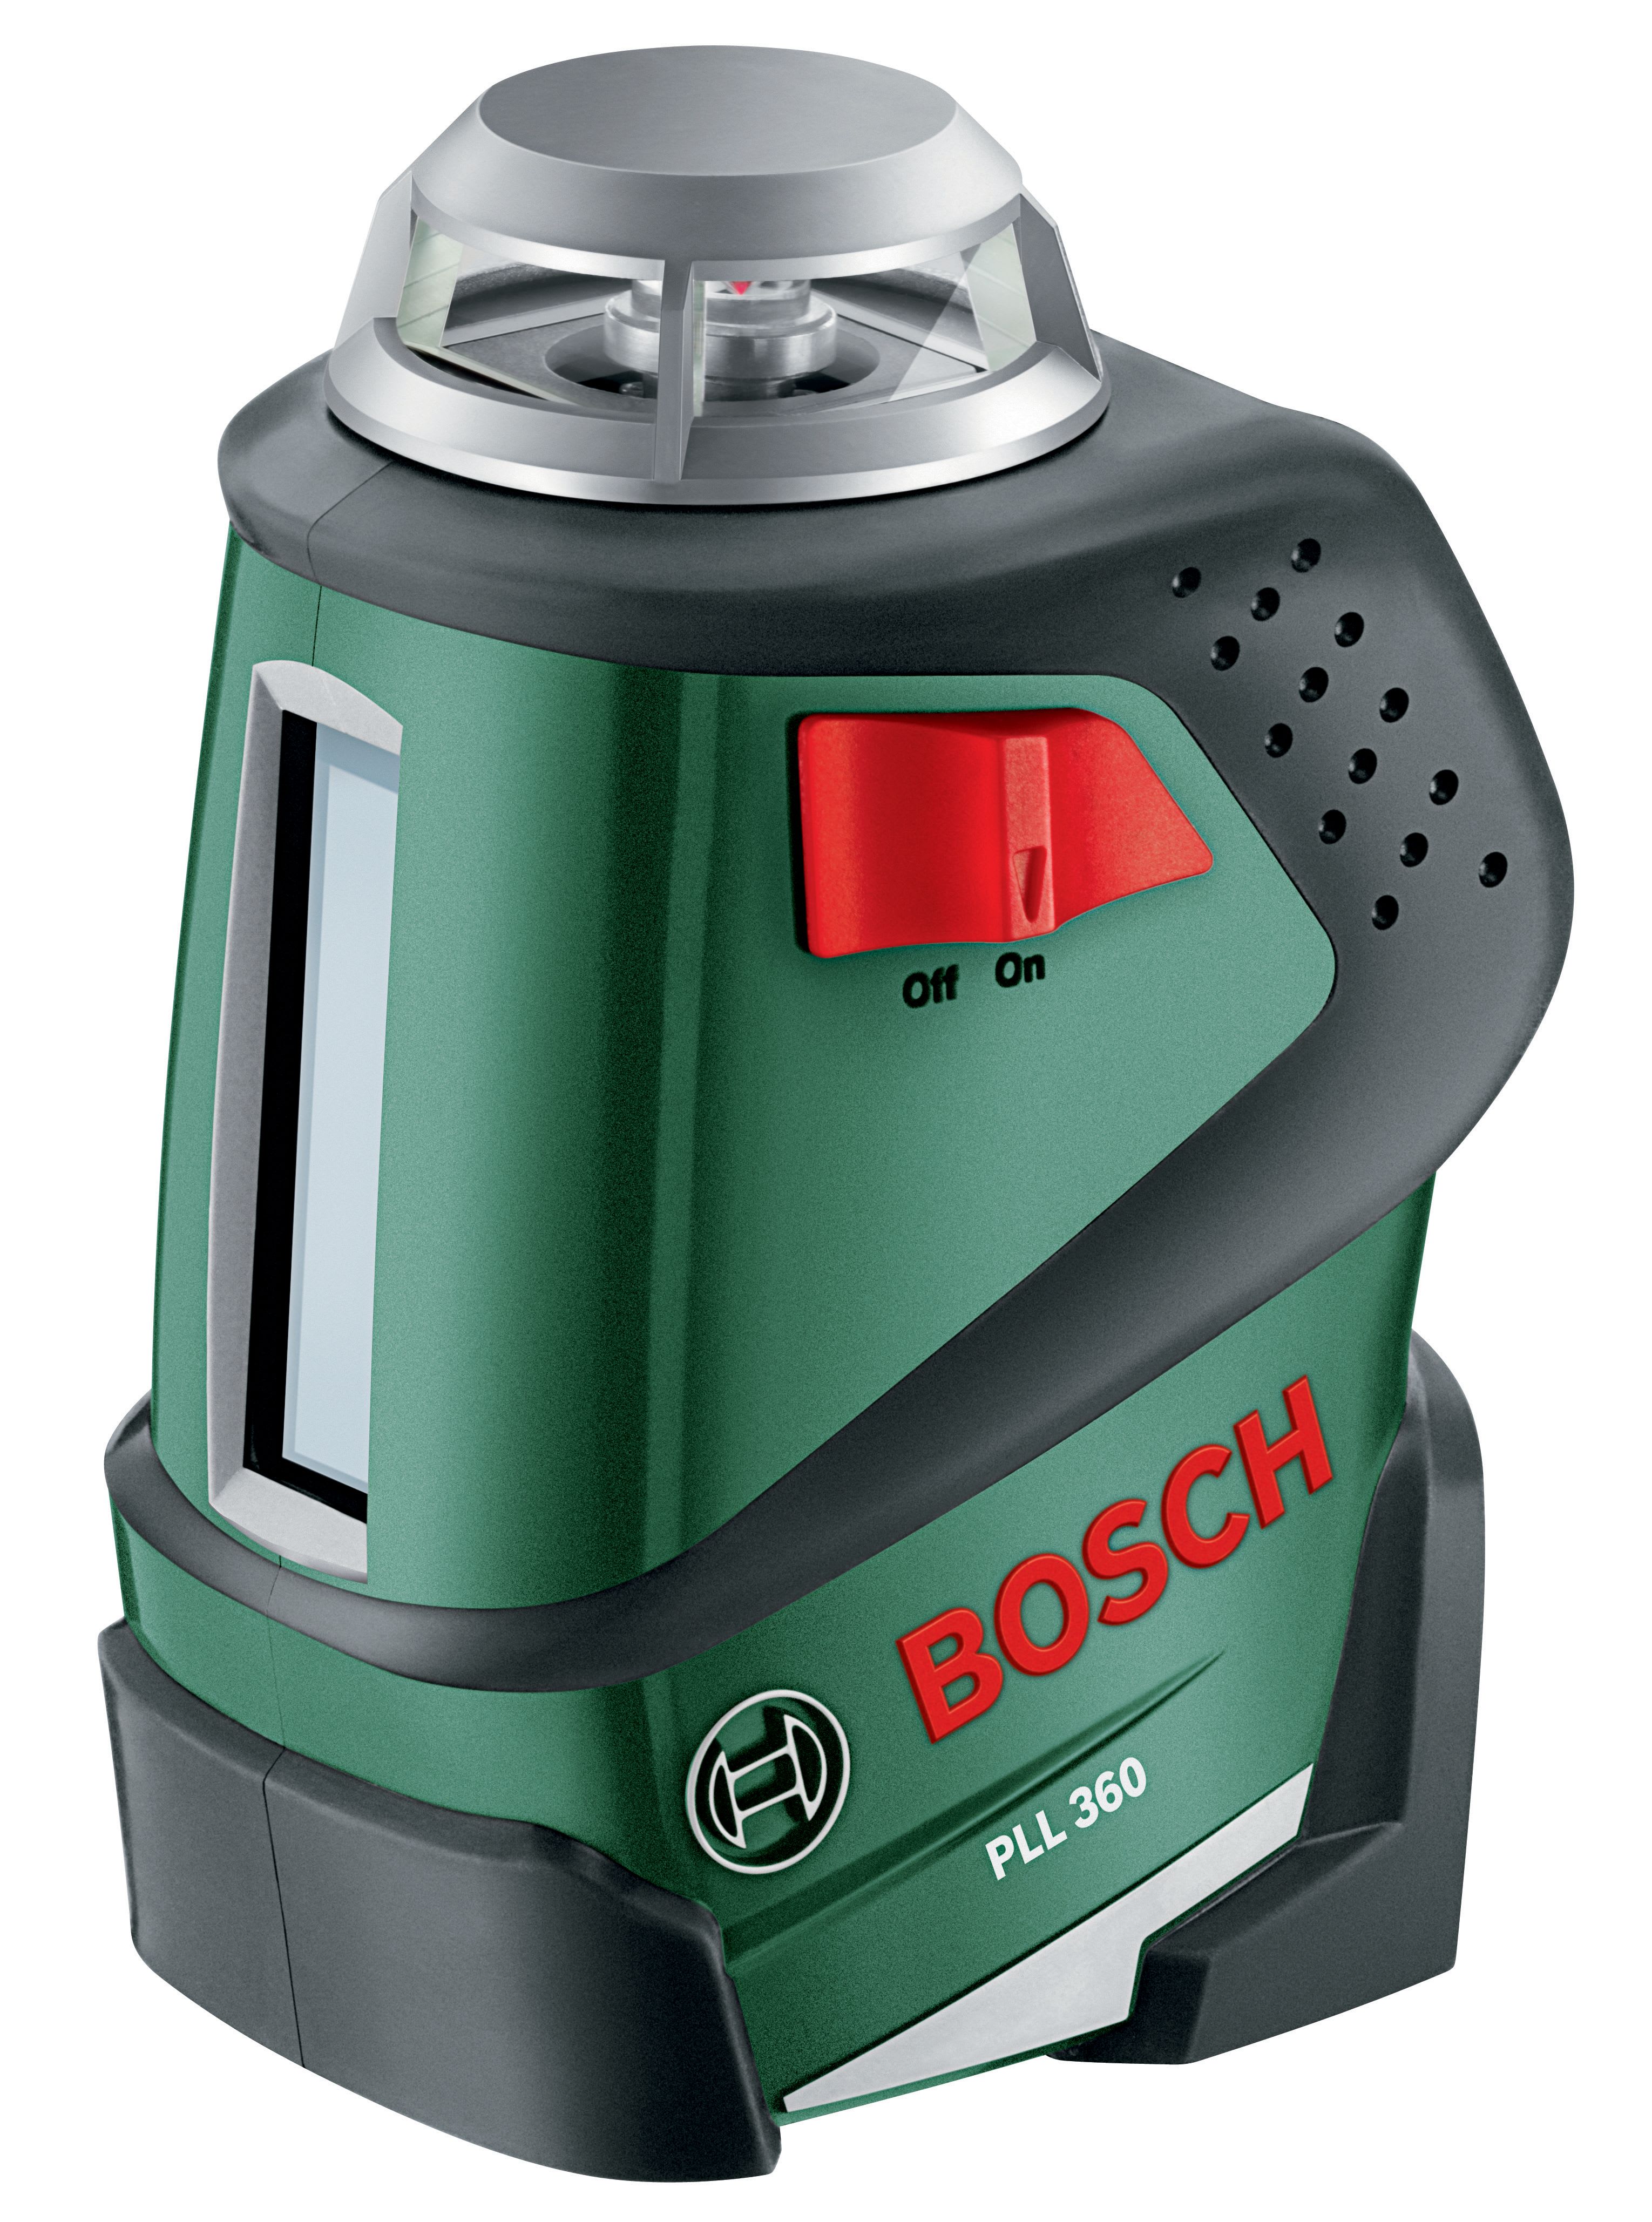 Bosch Pll 360 Cross Line Laser Level